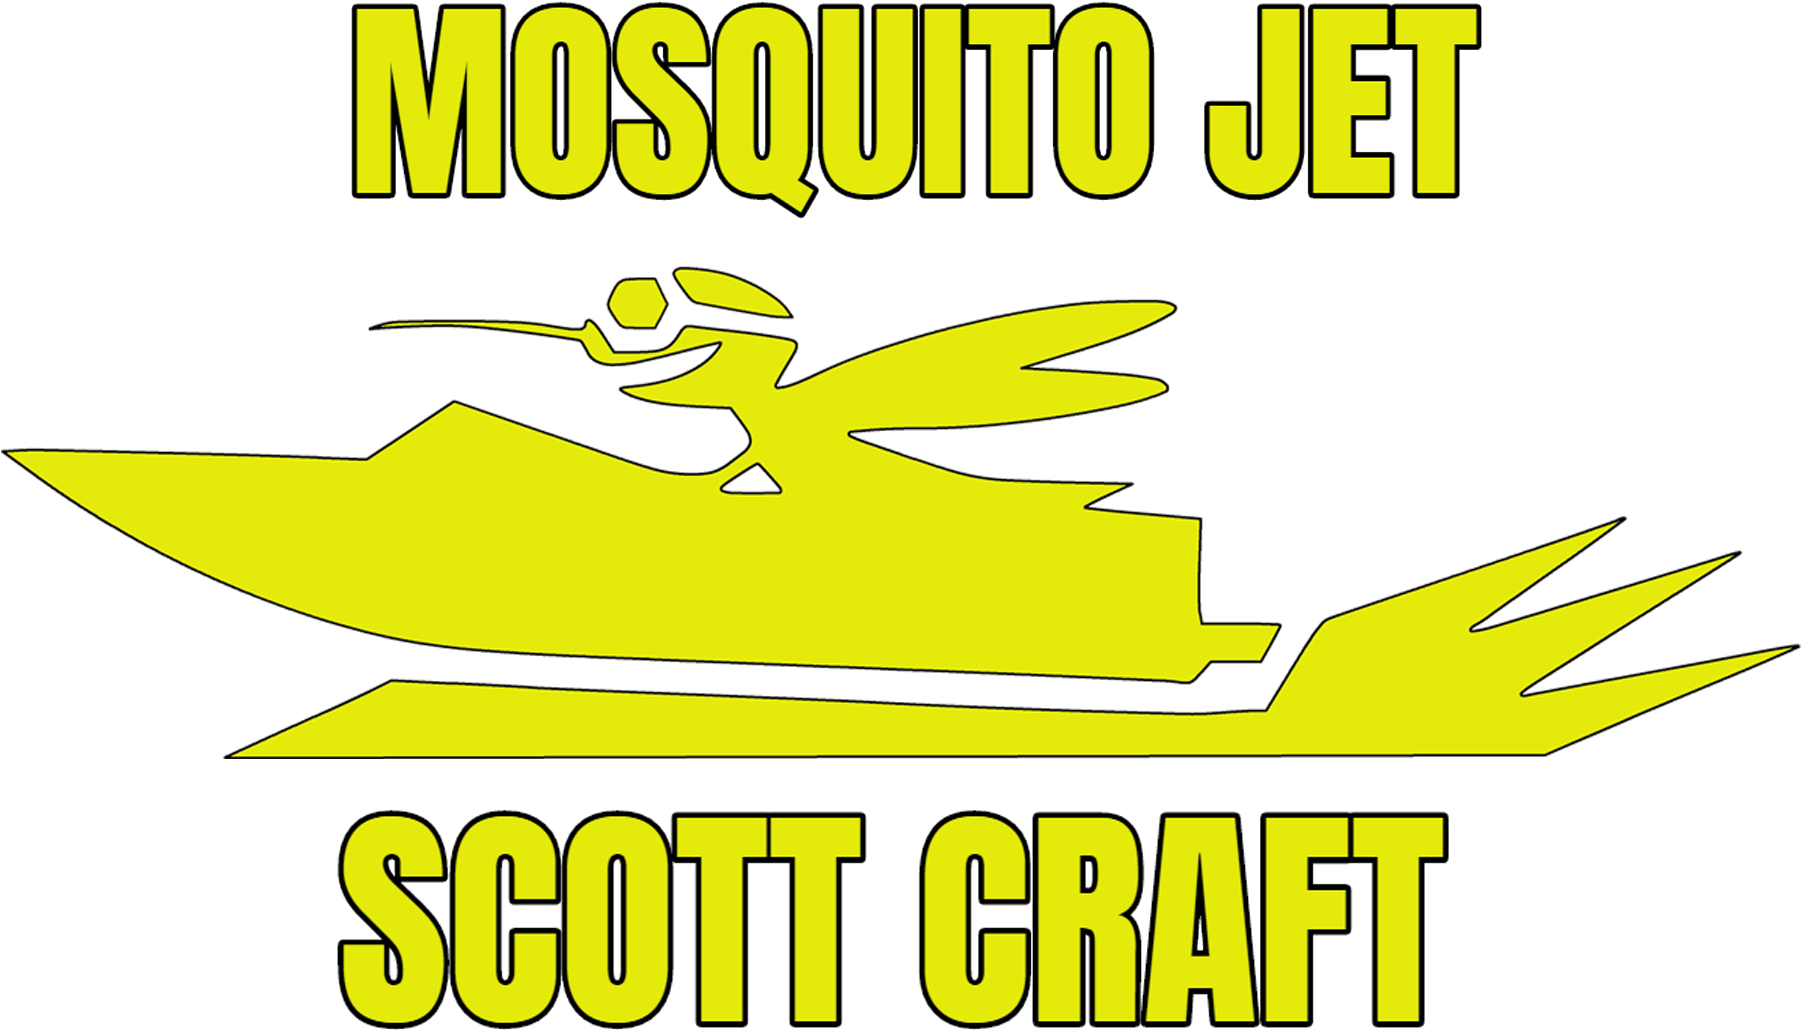 Mosquito Jet Scott Craft Logo PNG image